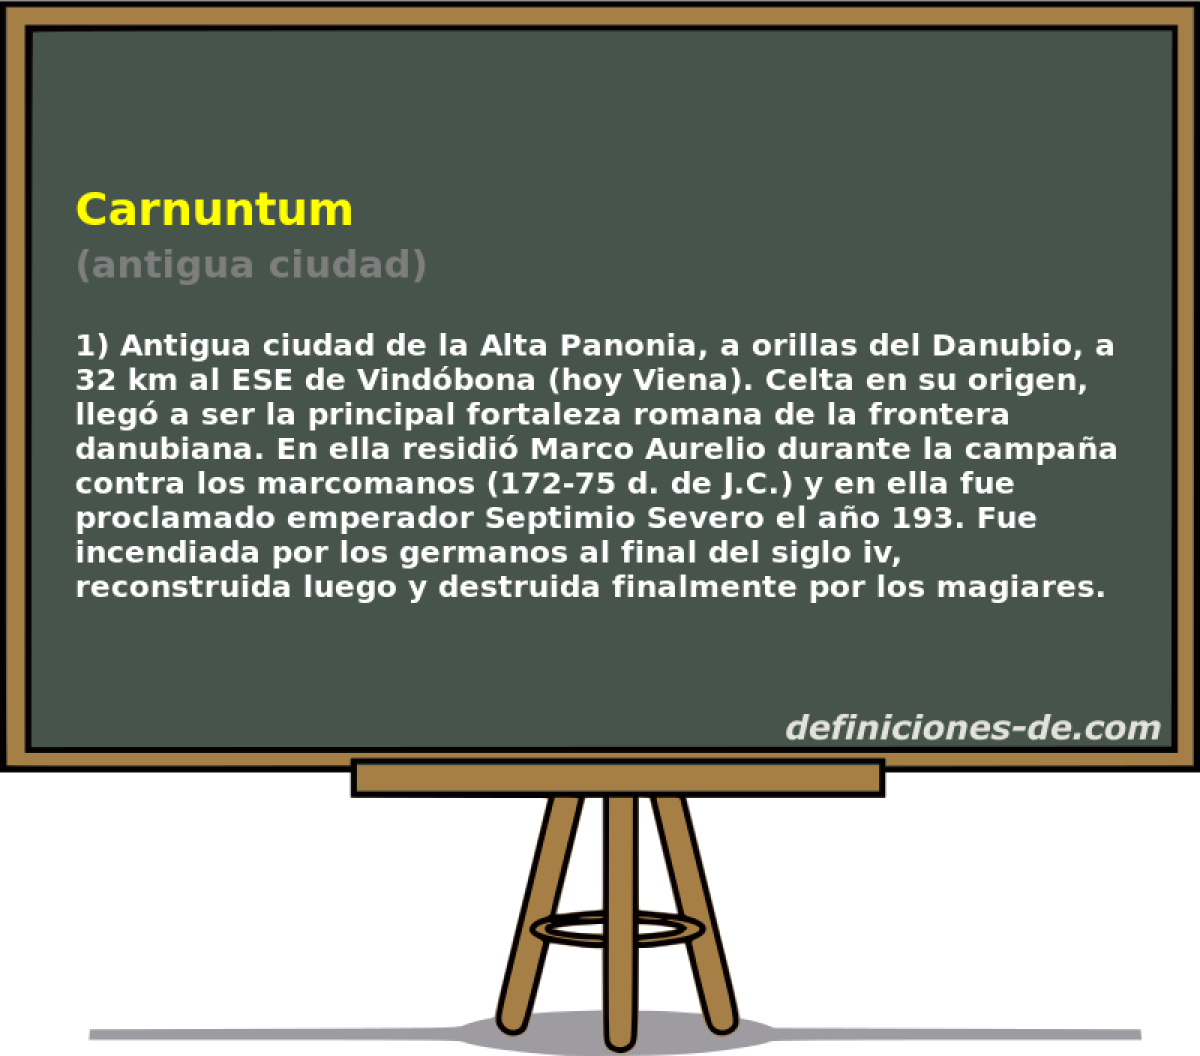 Carnuntum (antigua ciudad)